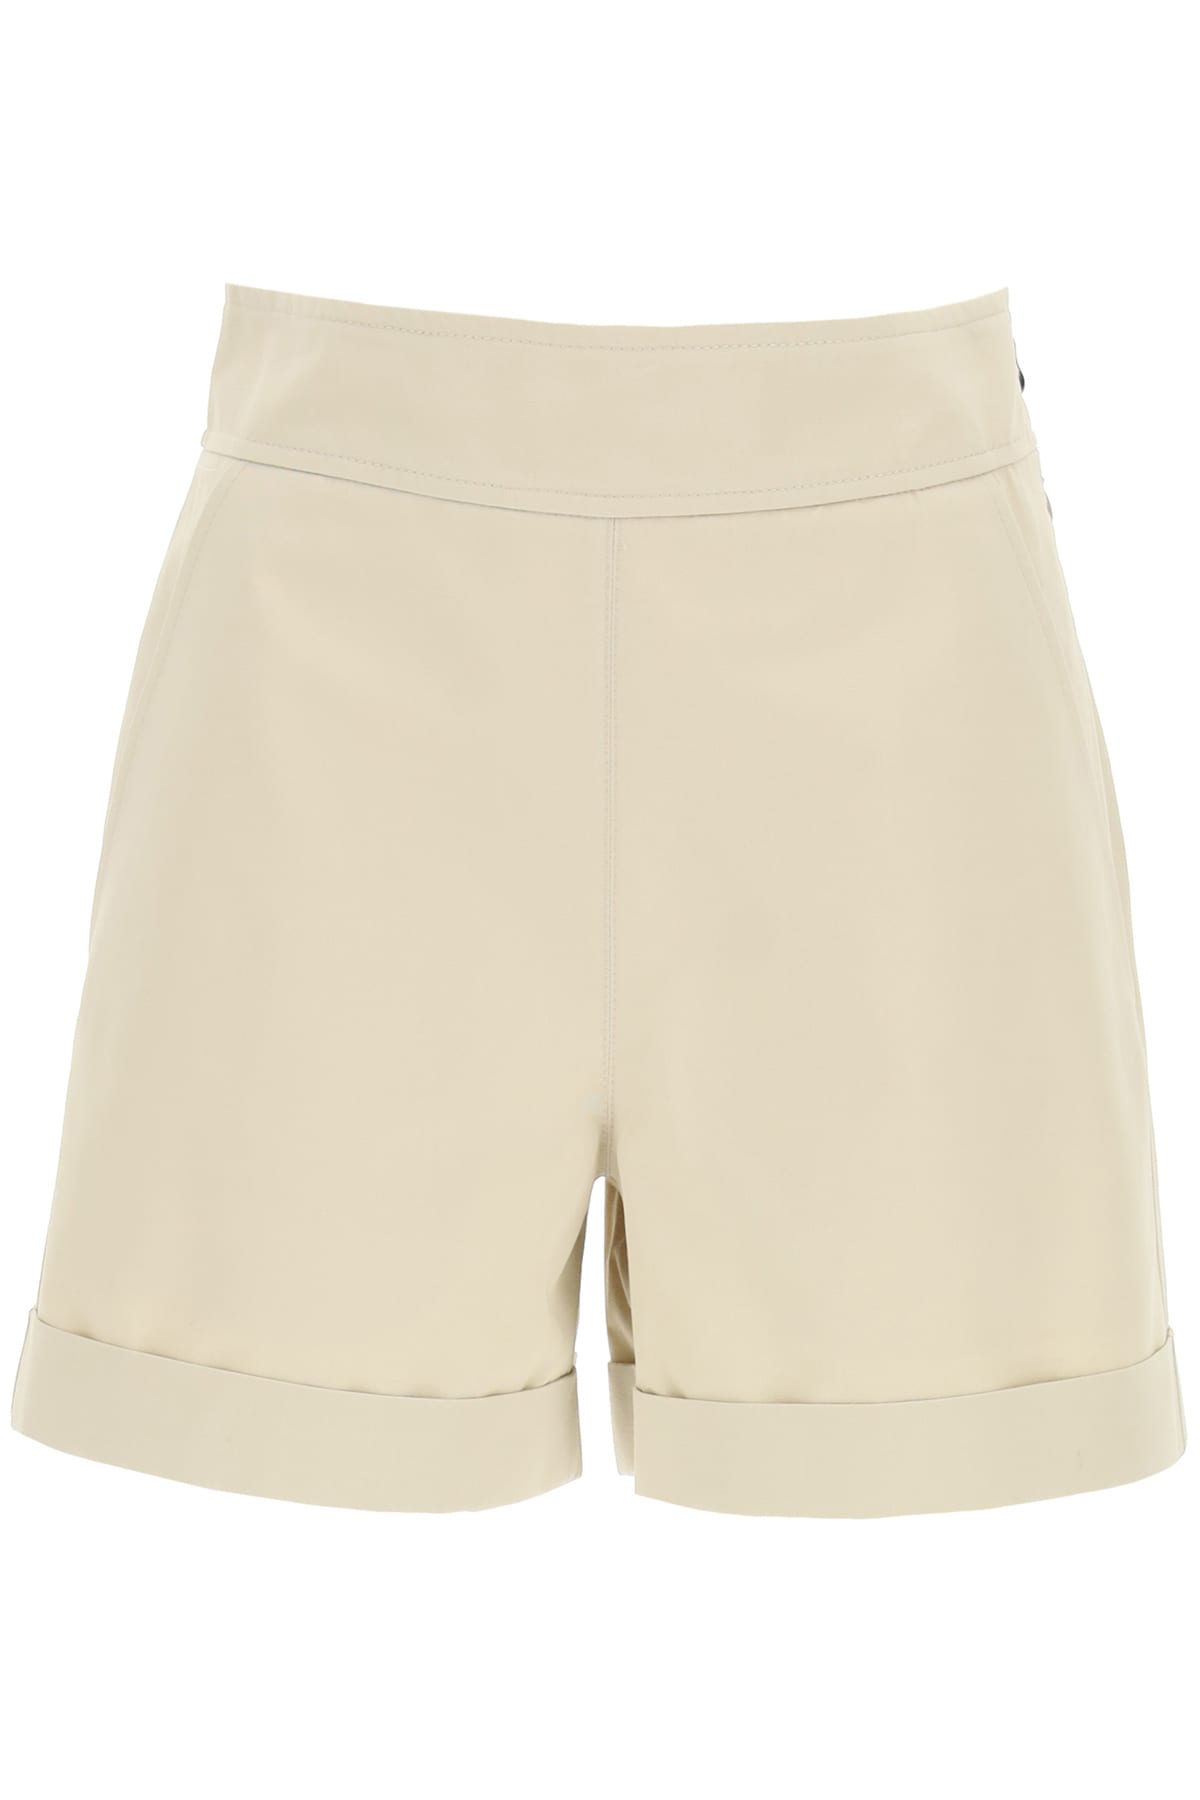 Marni Cotton And Linen Shorts